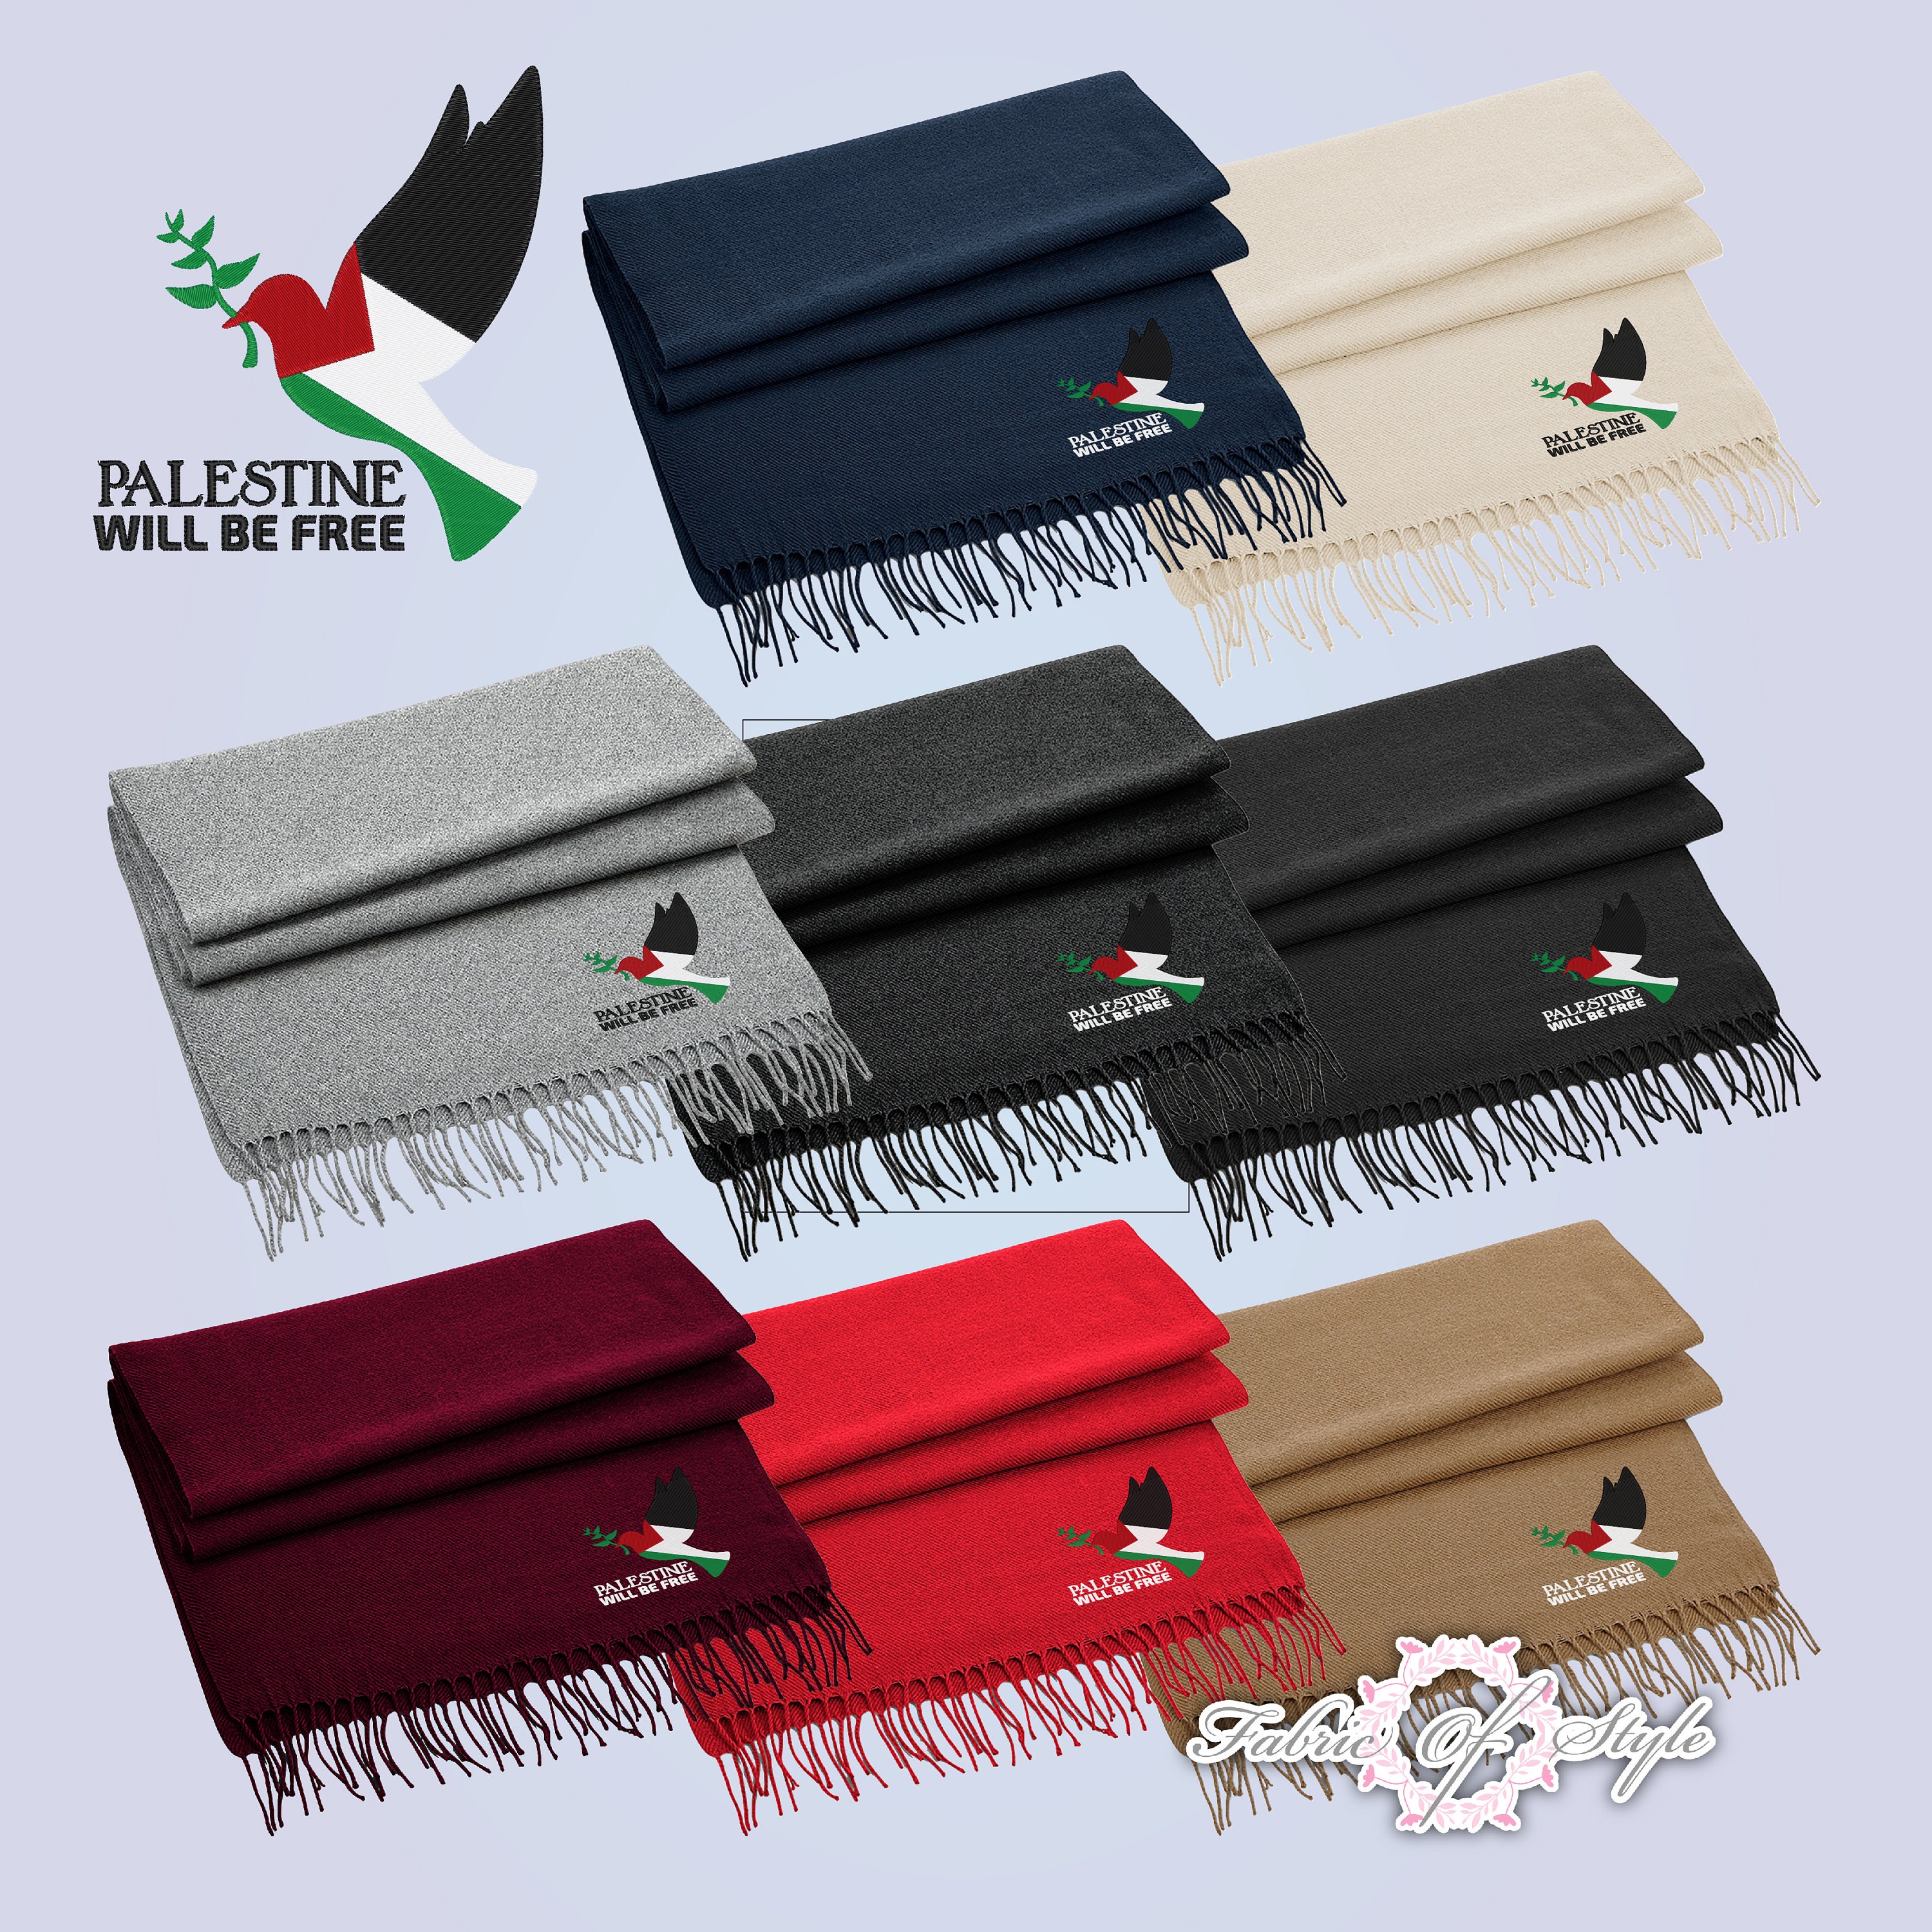 Palestine car accessories - .de